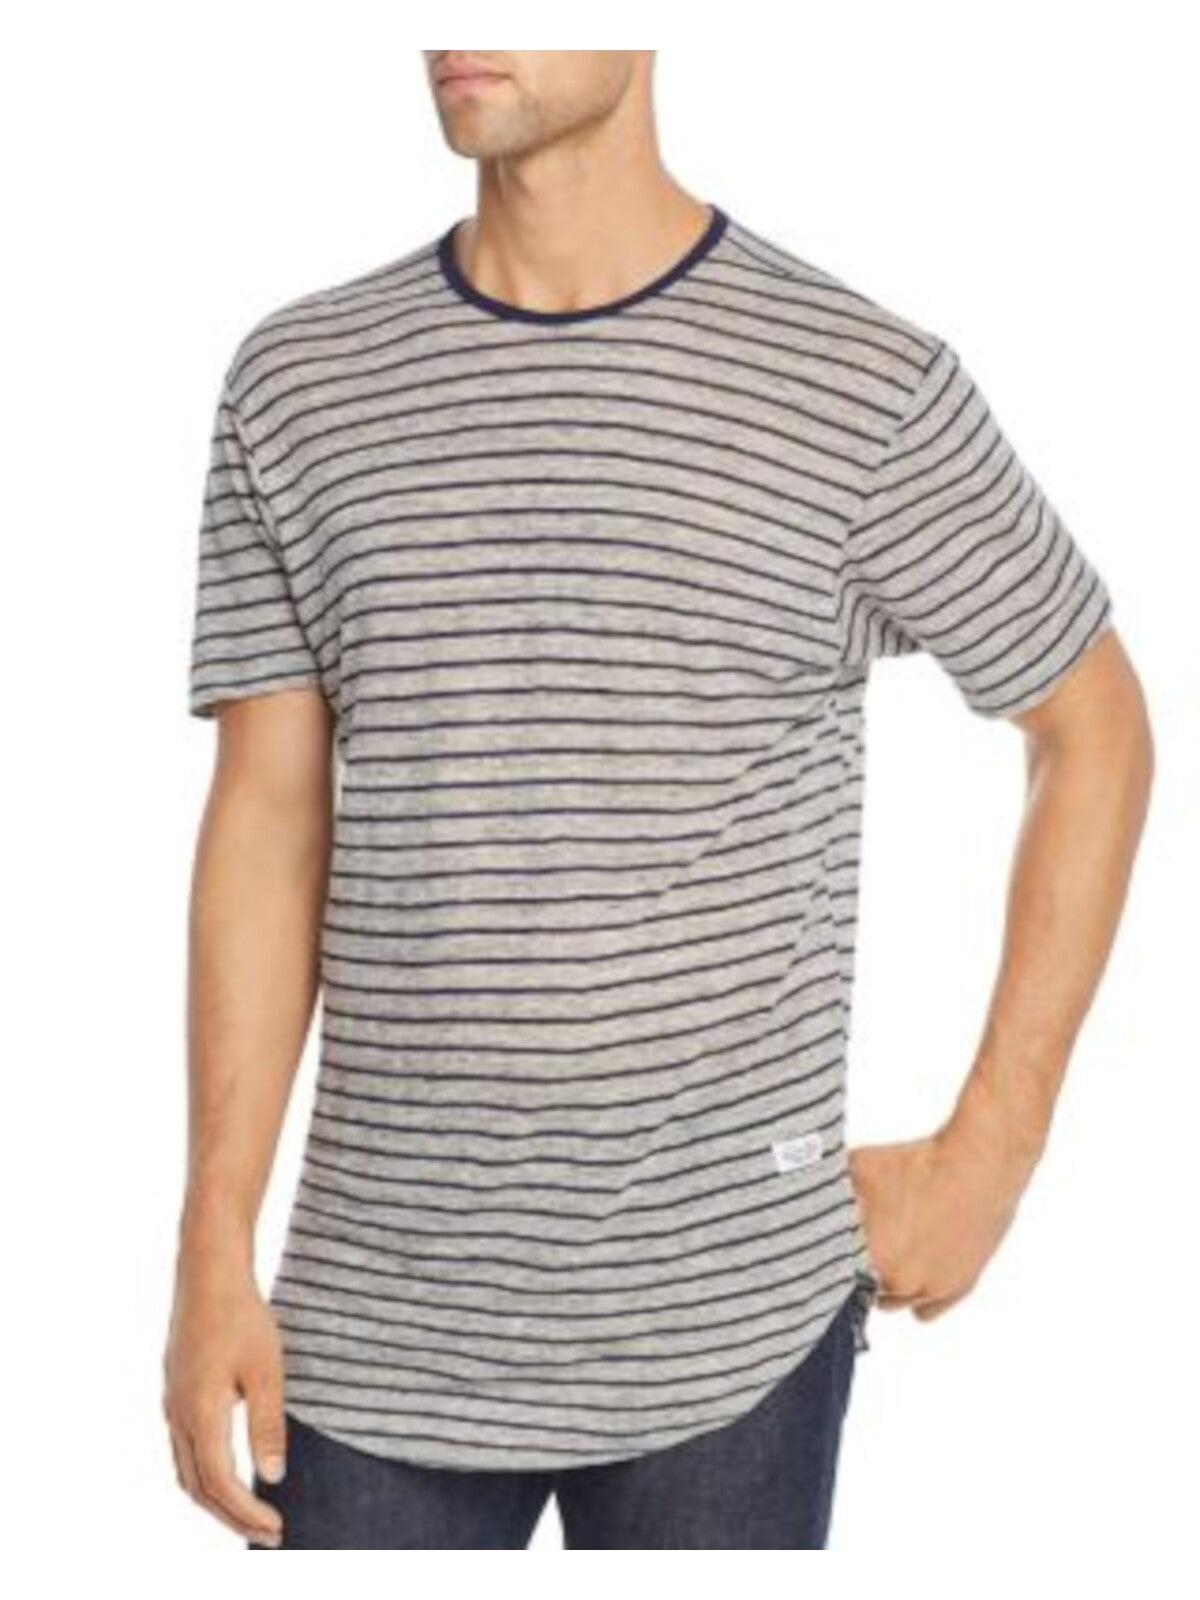 KINETIX Mens Gray Classic Fit T-Shirt S